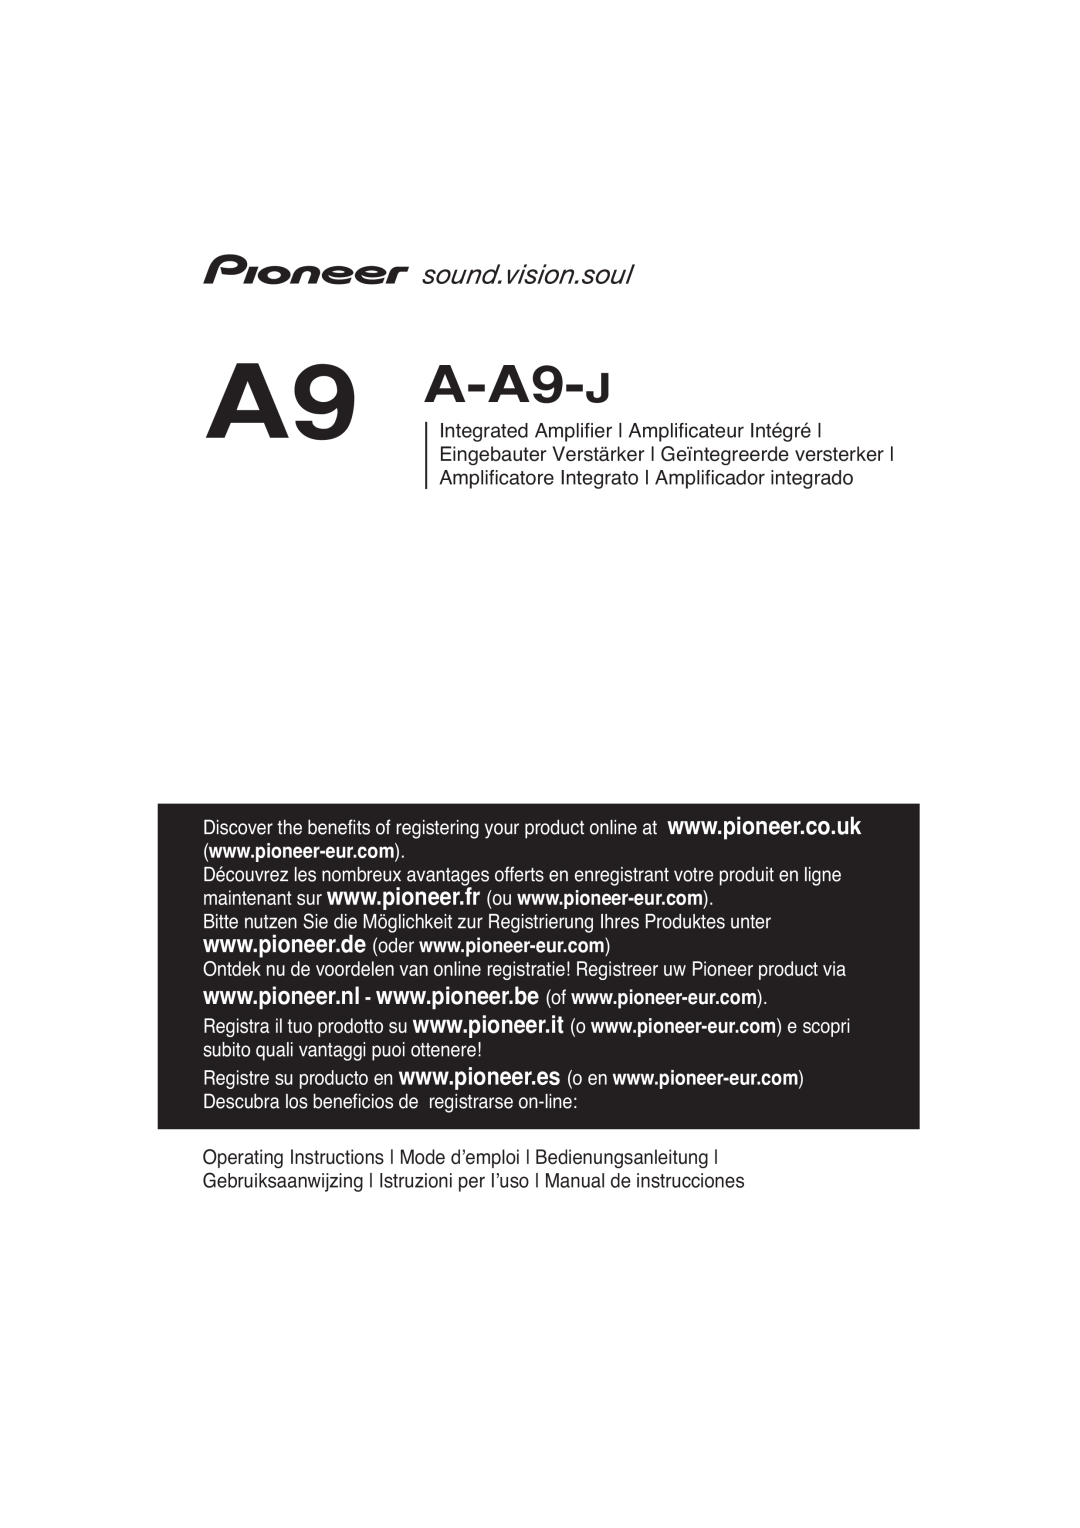 Pioneer manual A9 A-A9-J, Integrated Amplifier Amplificateur Intégré, Amplificatore Integrato Amplificador integrado 